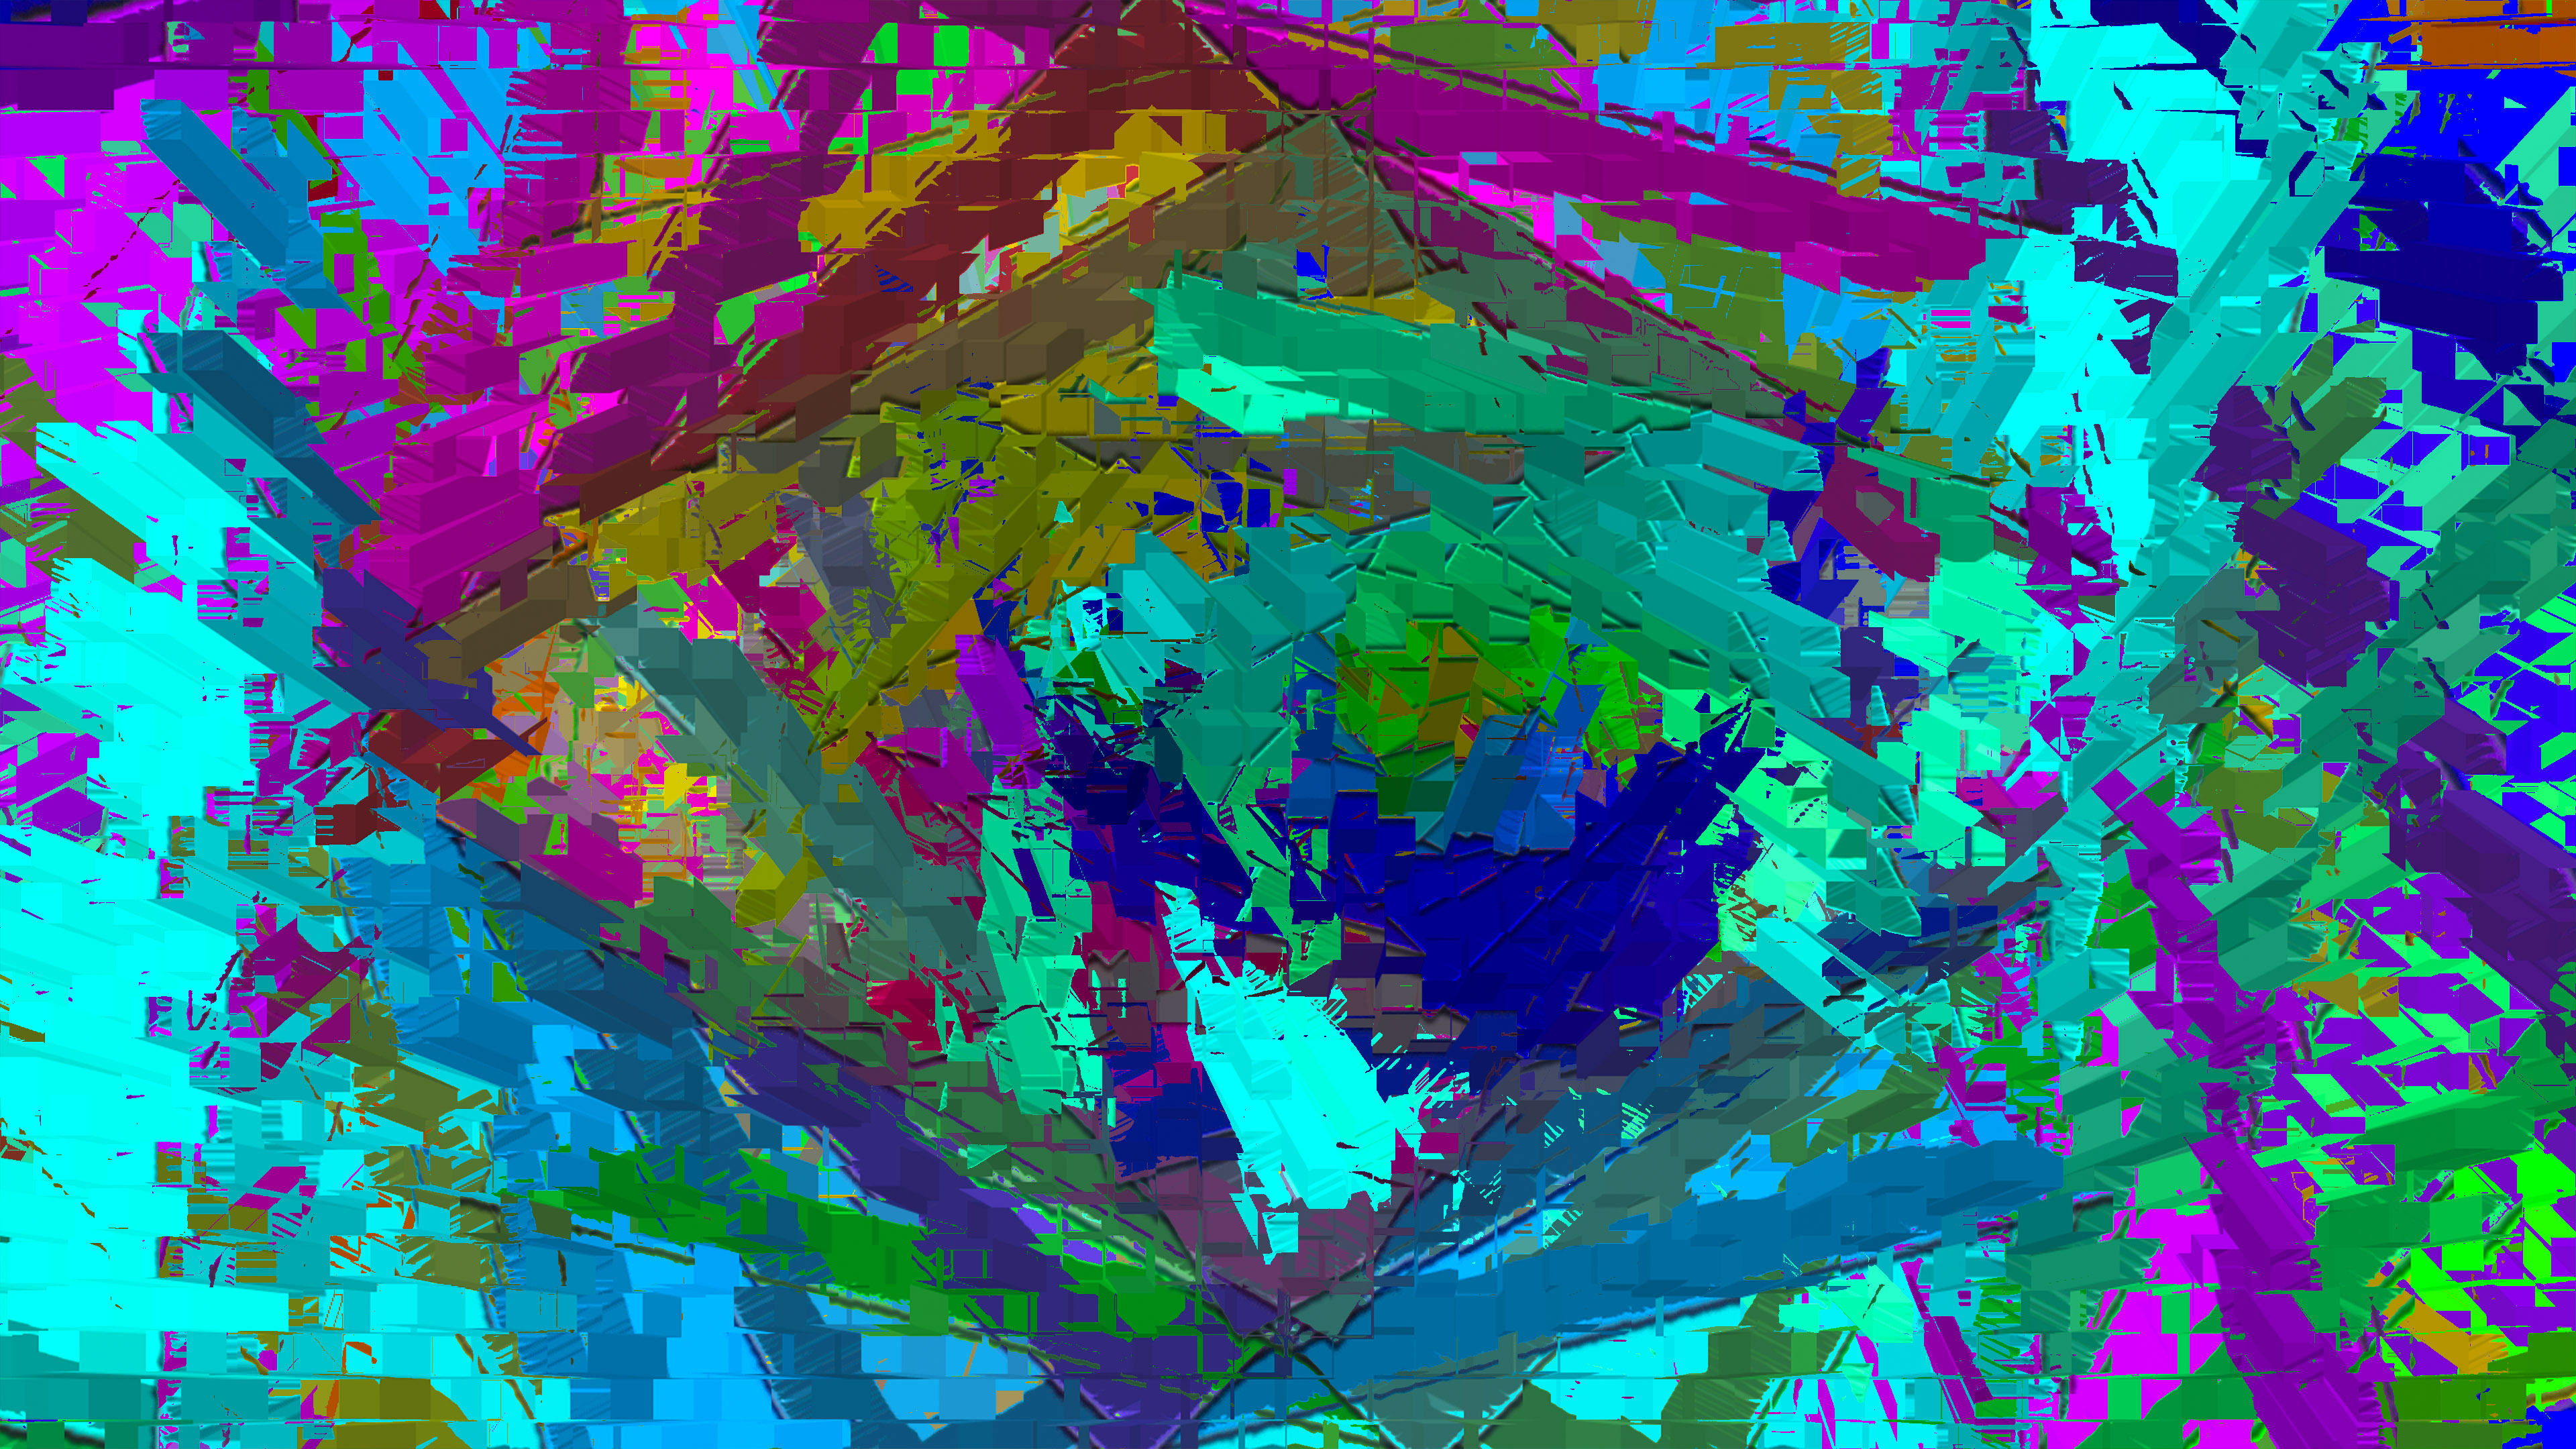 abstract wallpaper for desktop in 4K Ultra HD resolution